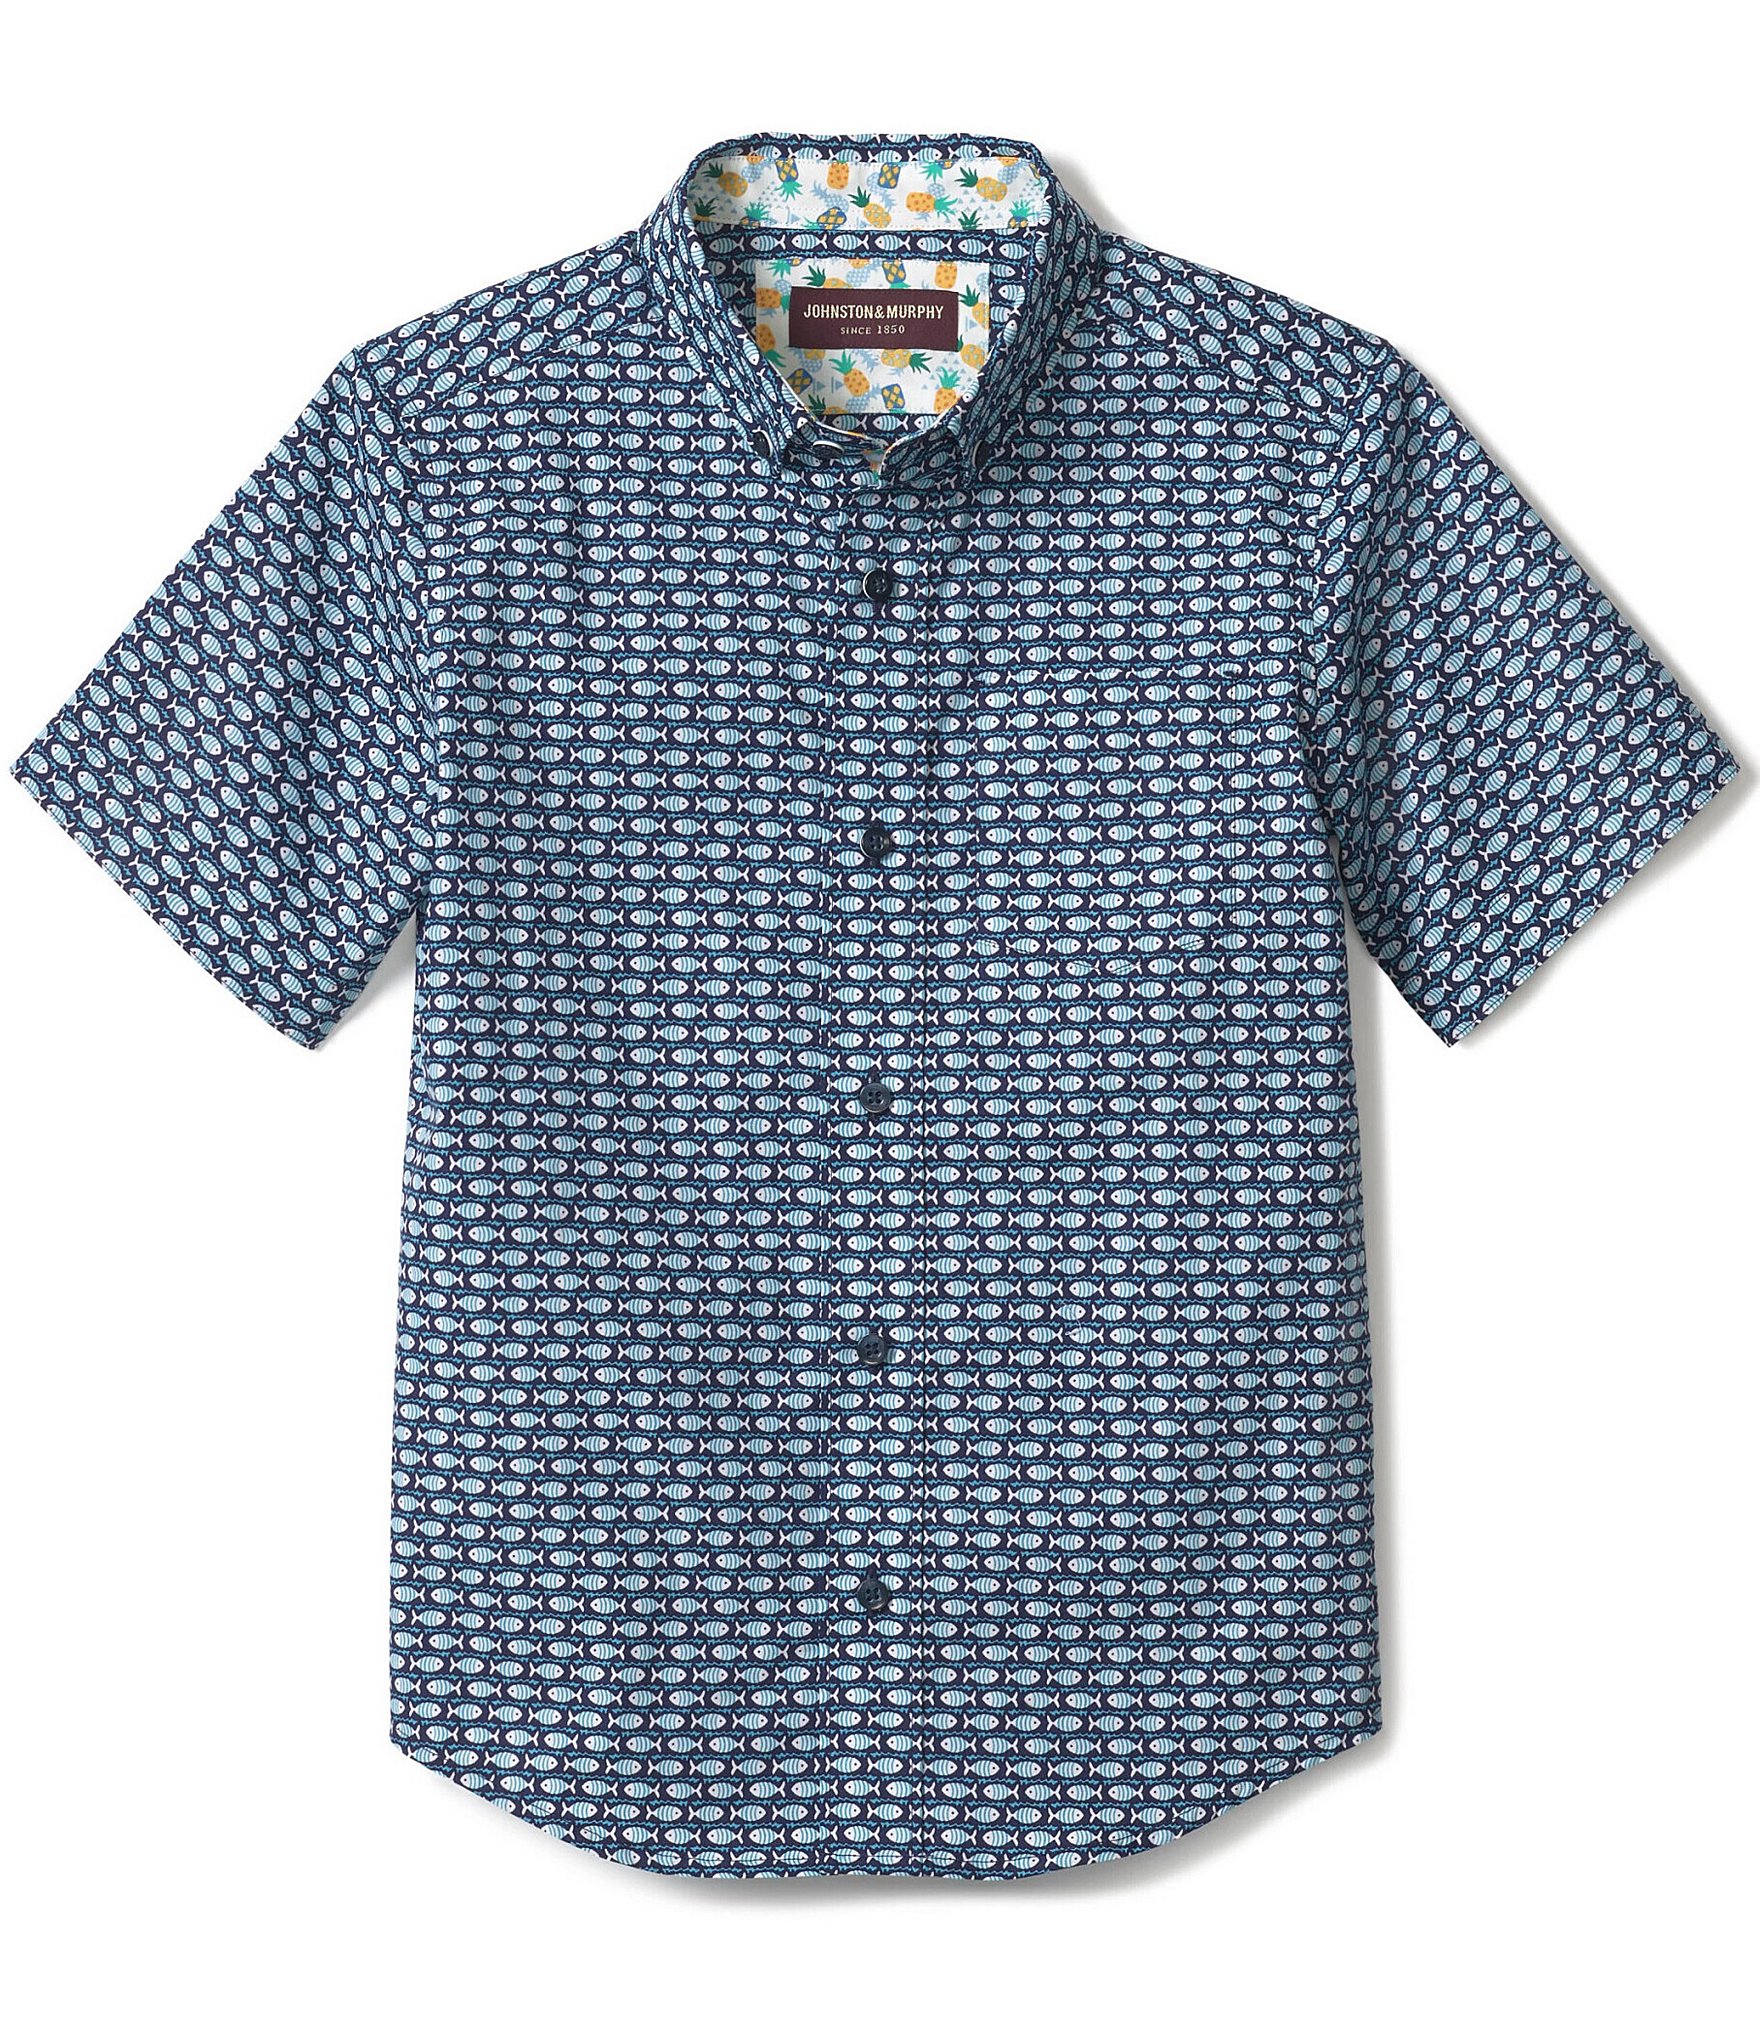 Johnston Murphy LittleBig Boys 4-16 Fish Print Short Sleeve Shirt - L